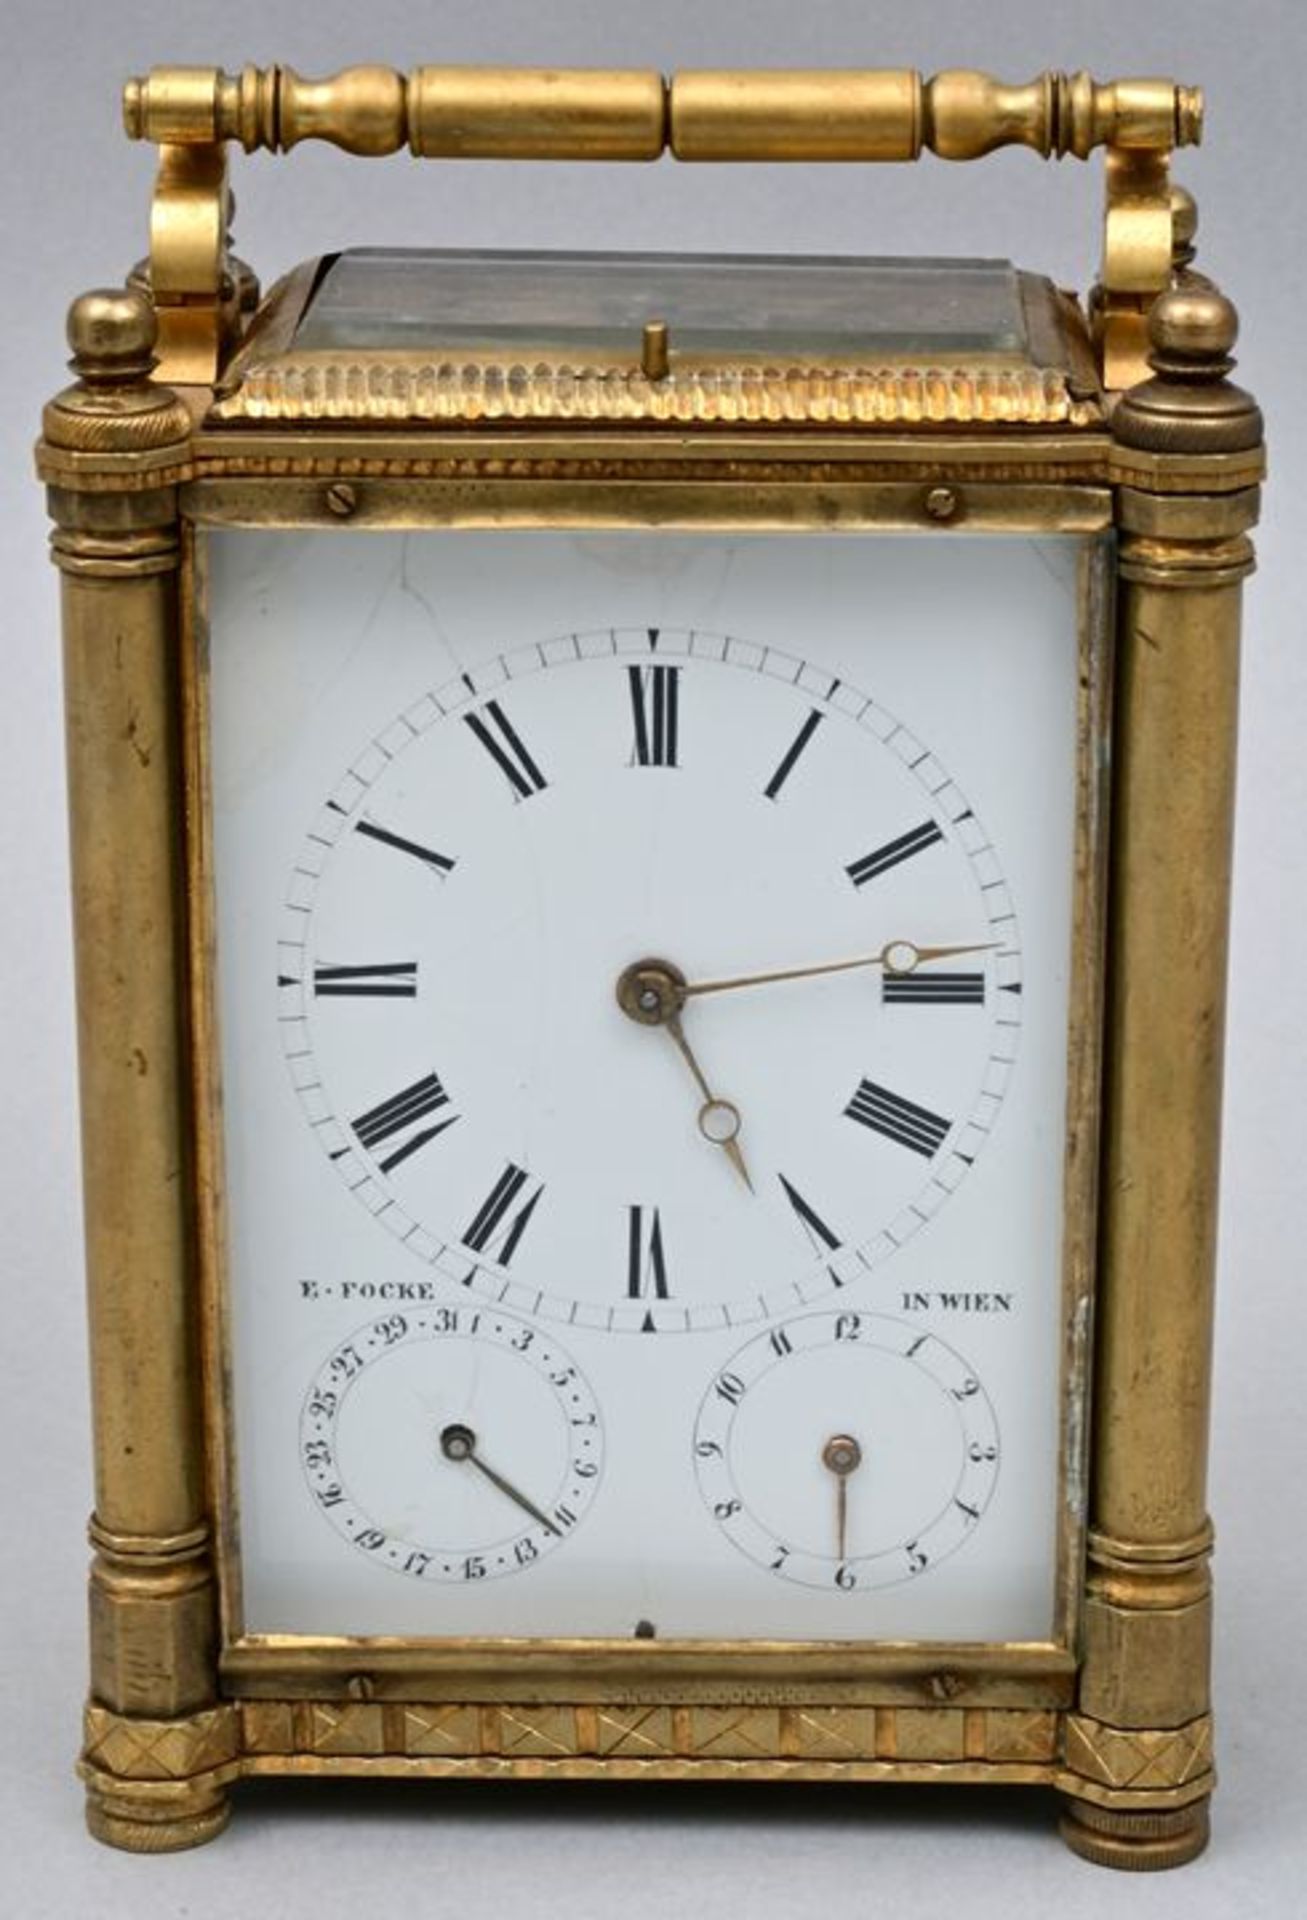 Reiseuhr E. Foecke Wien / Travel clock